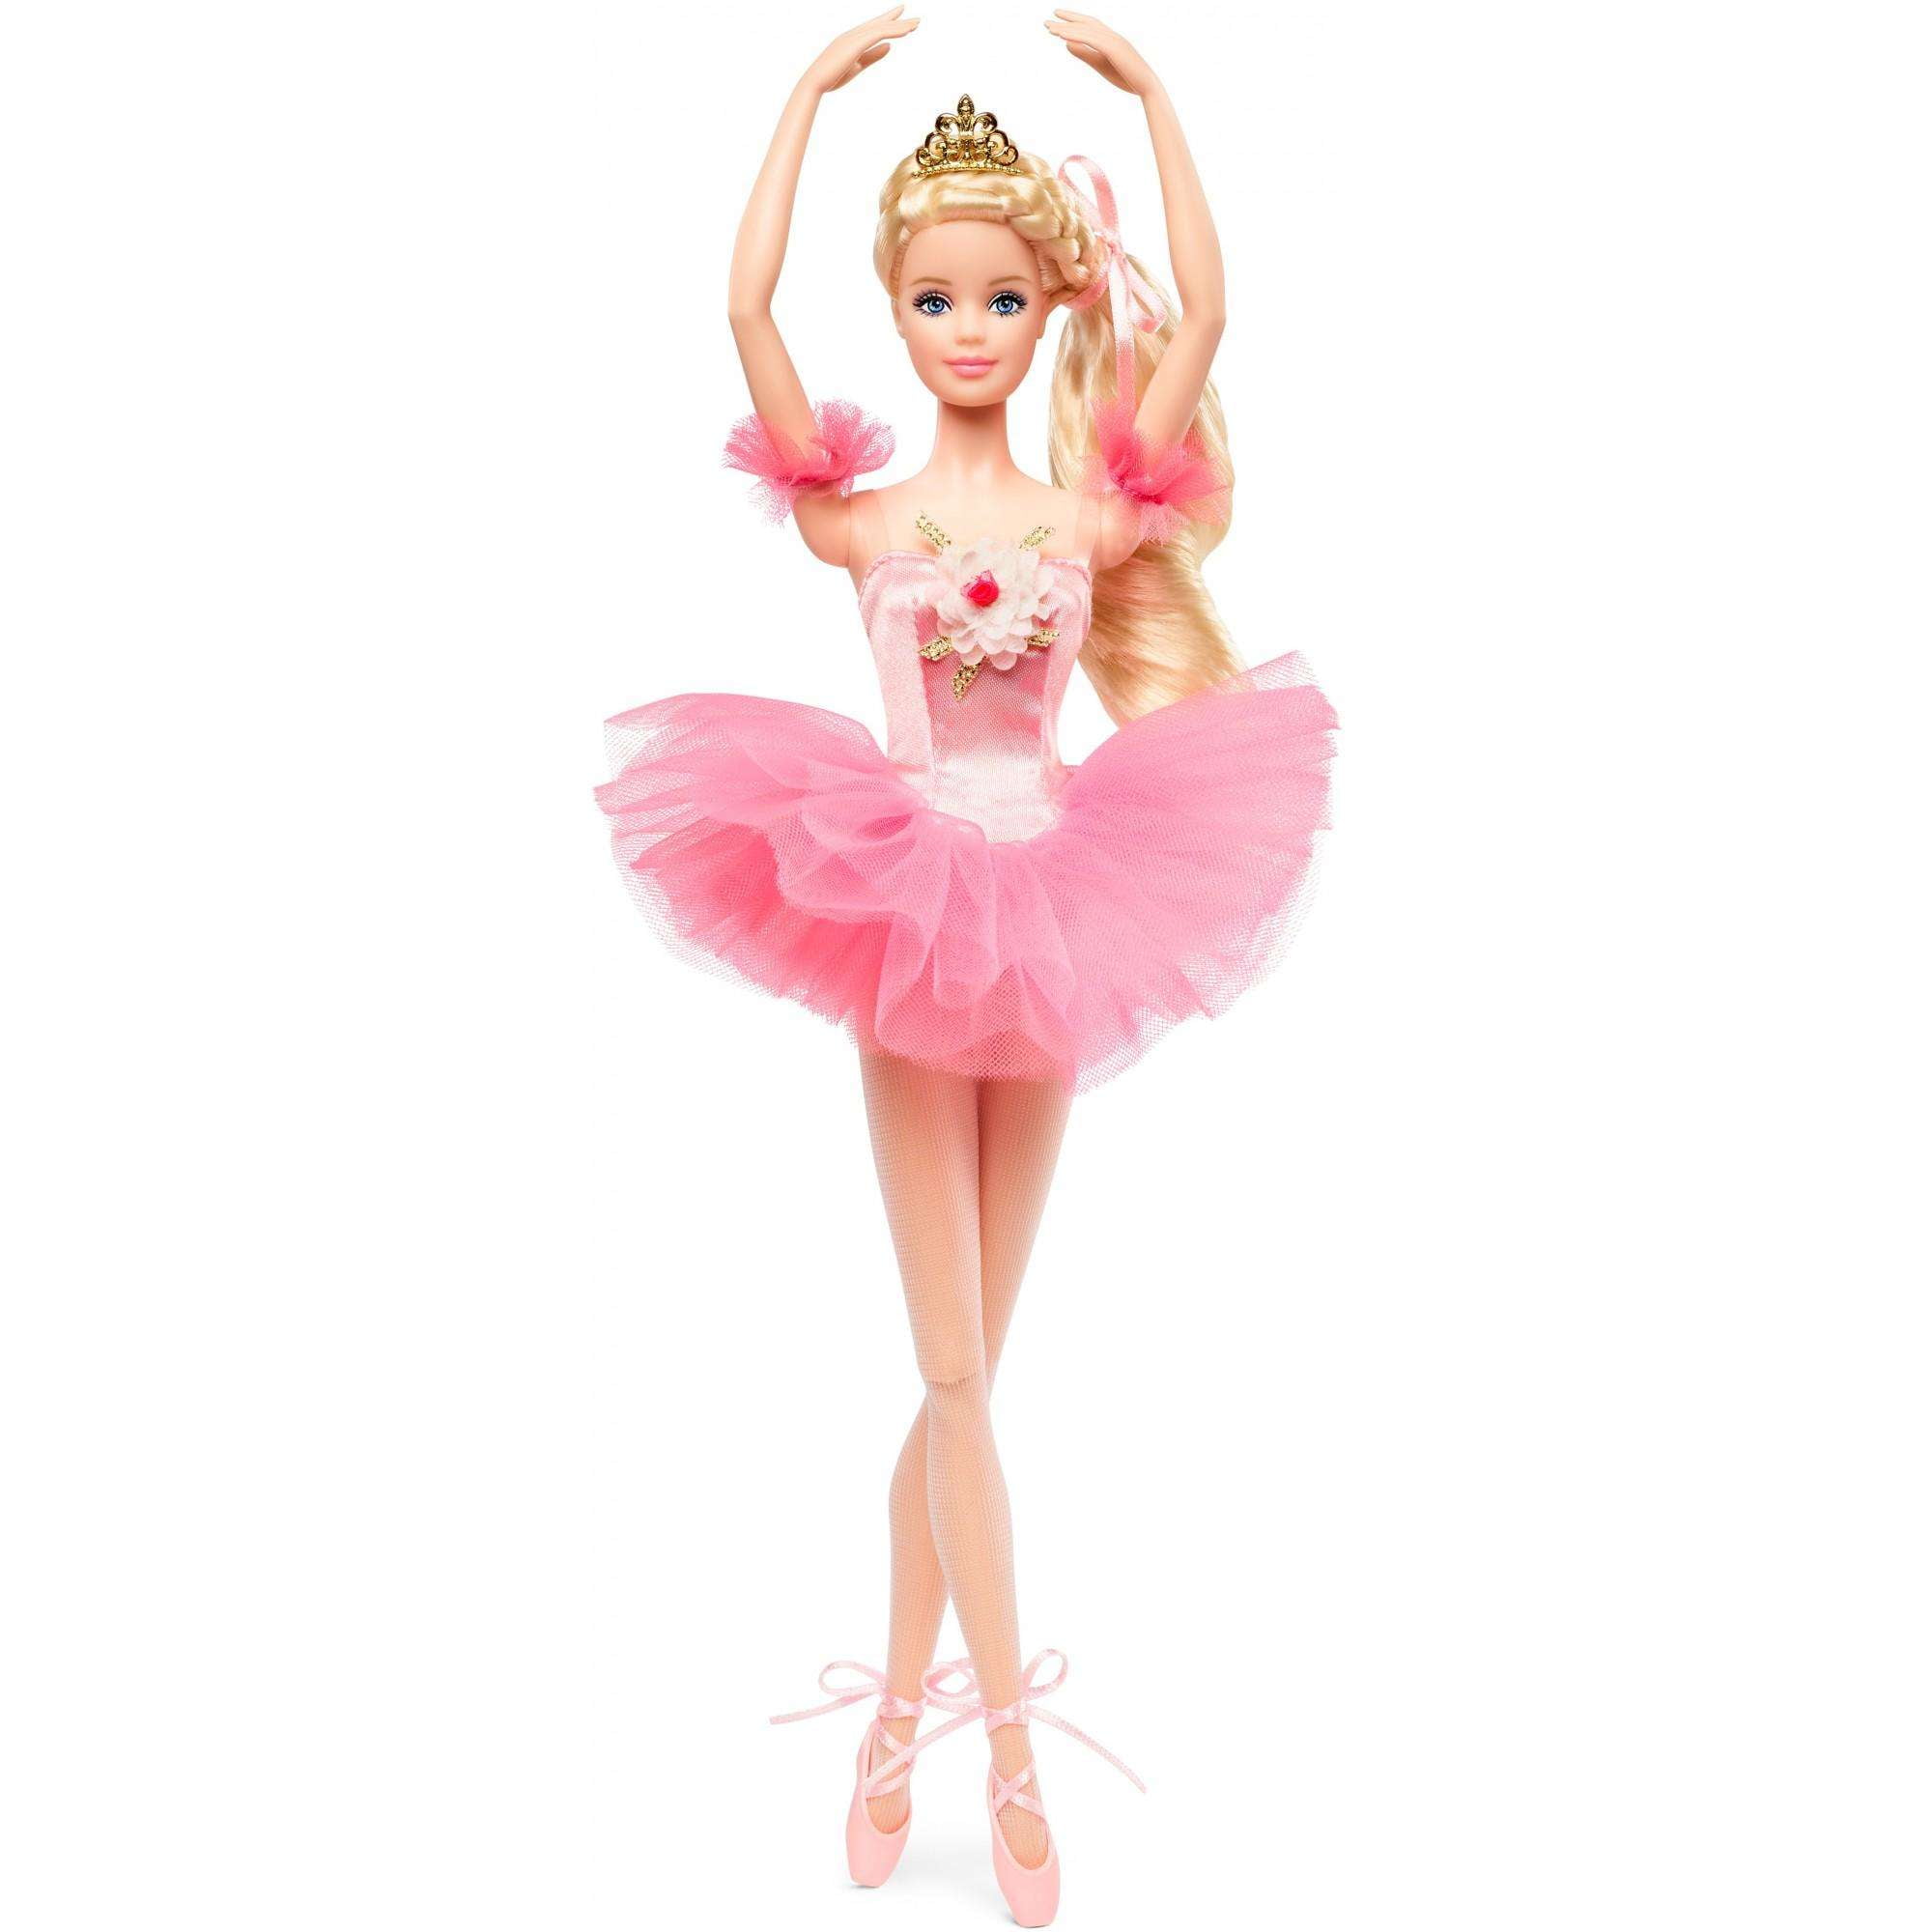 Barbie Ballerina  Beautiful barbie dolls, Ballerina barbie, Barbie fashion